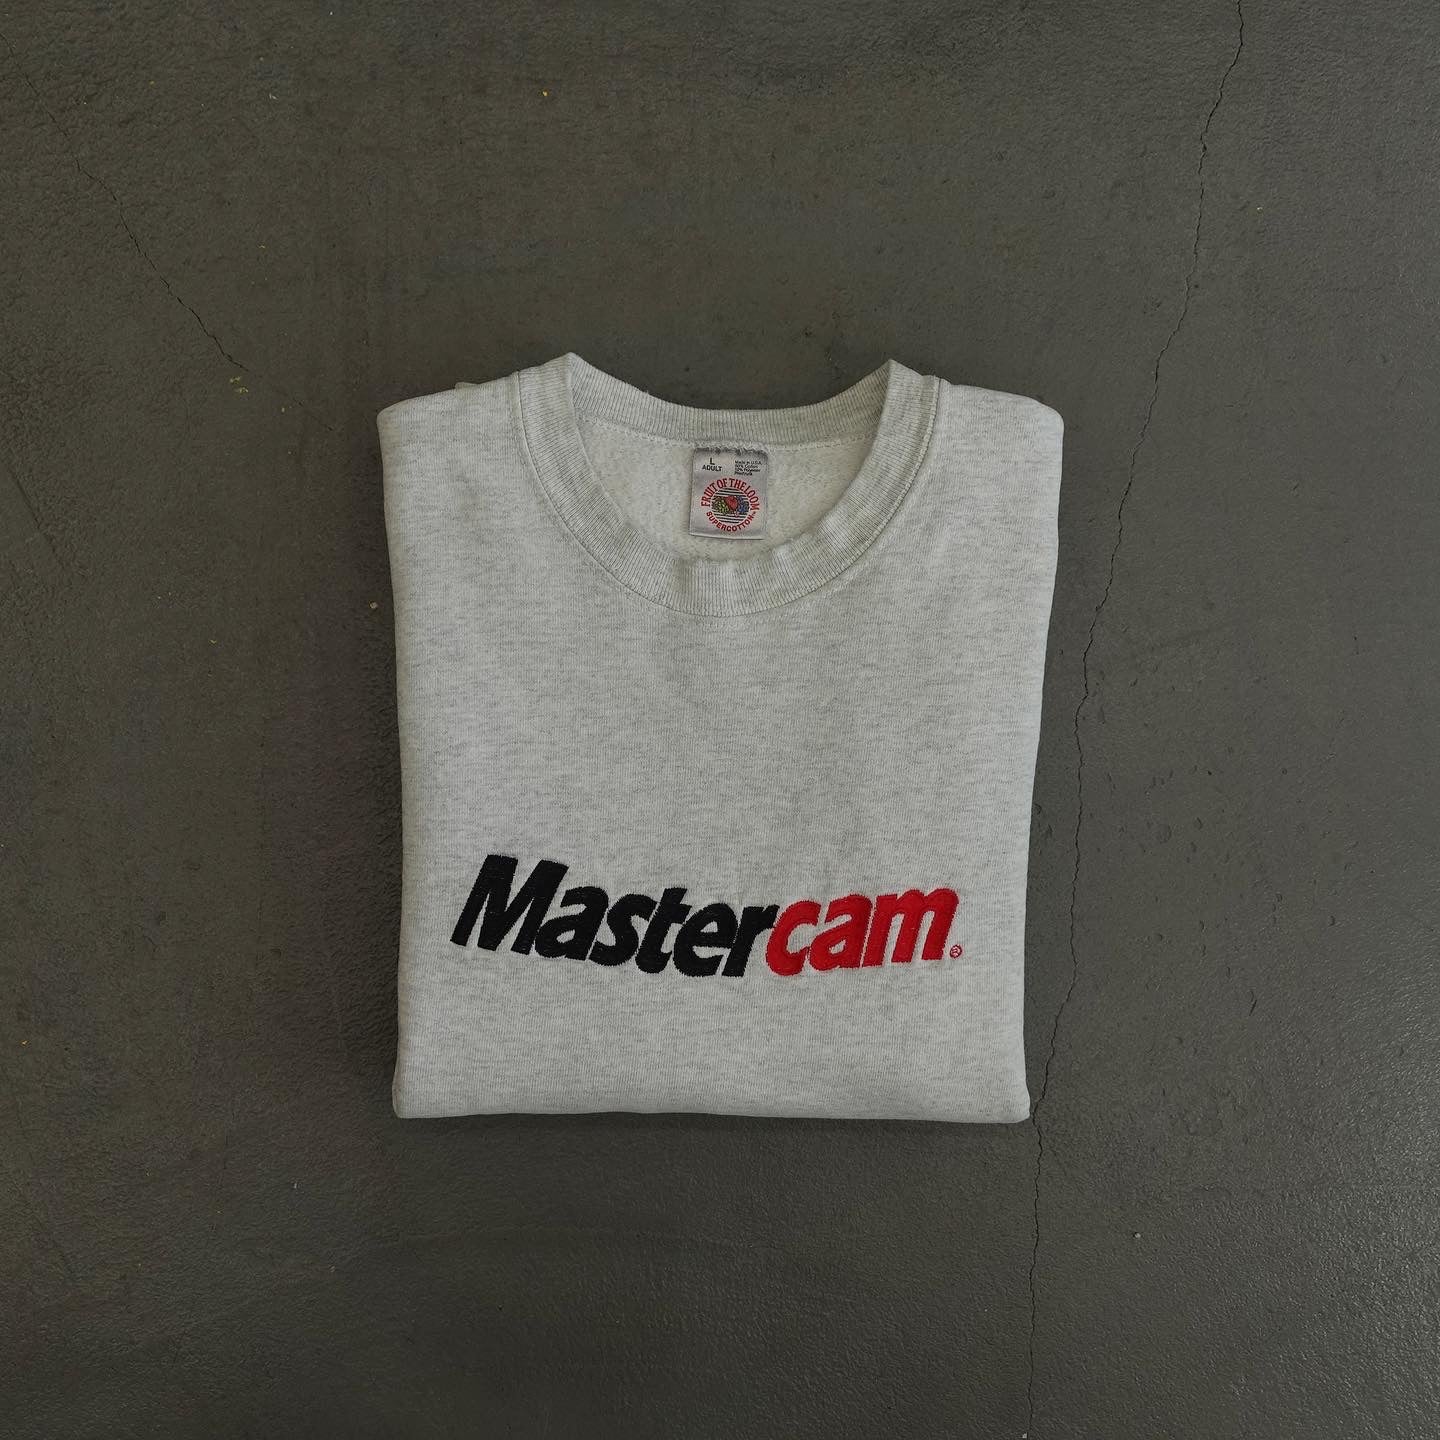 Mastercam. Crewneck Sweatshirt